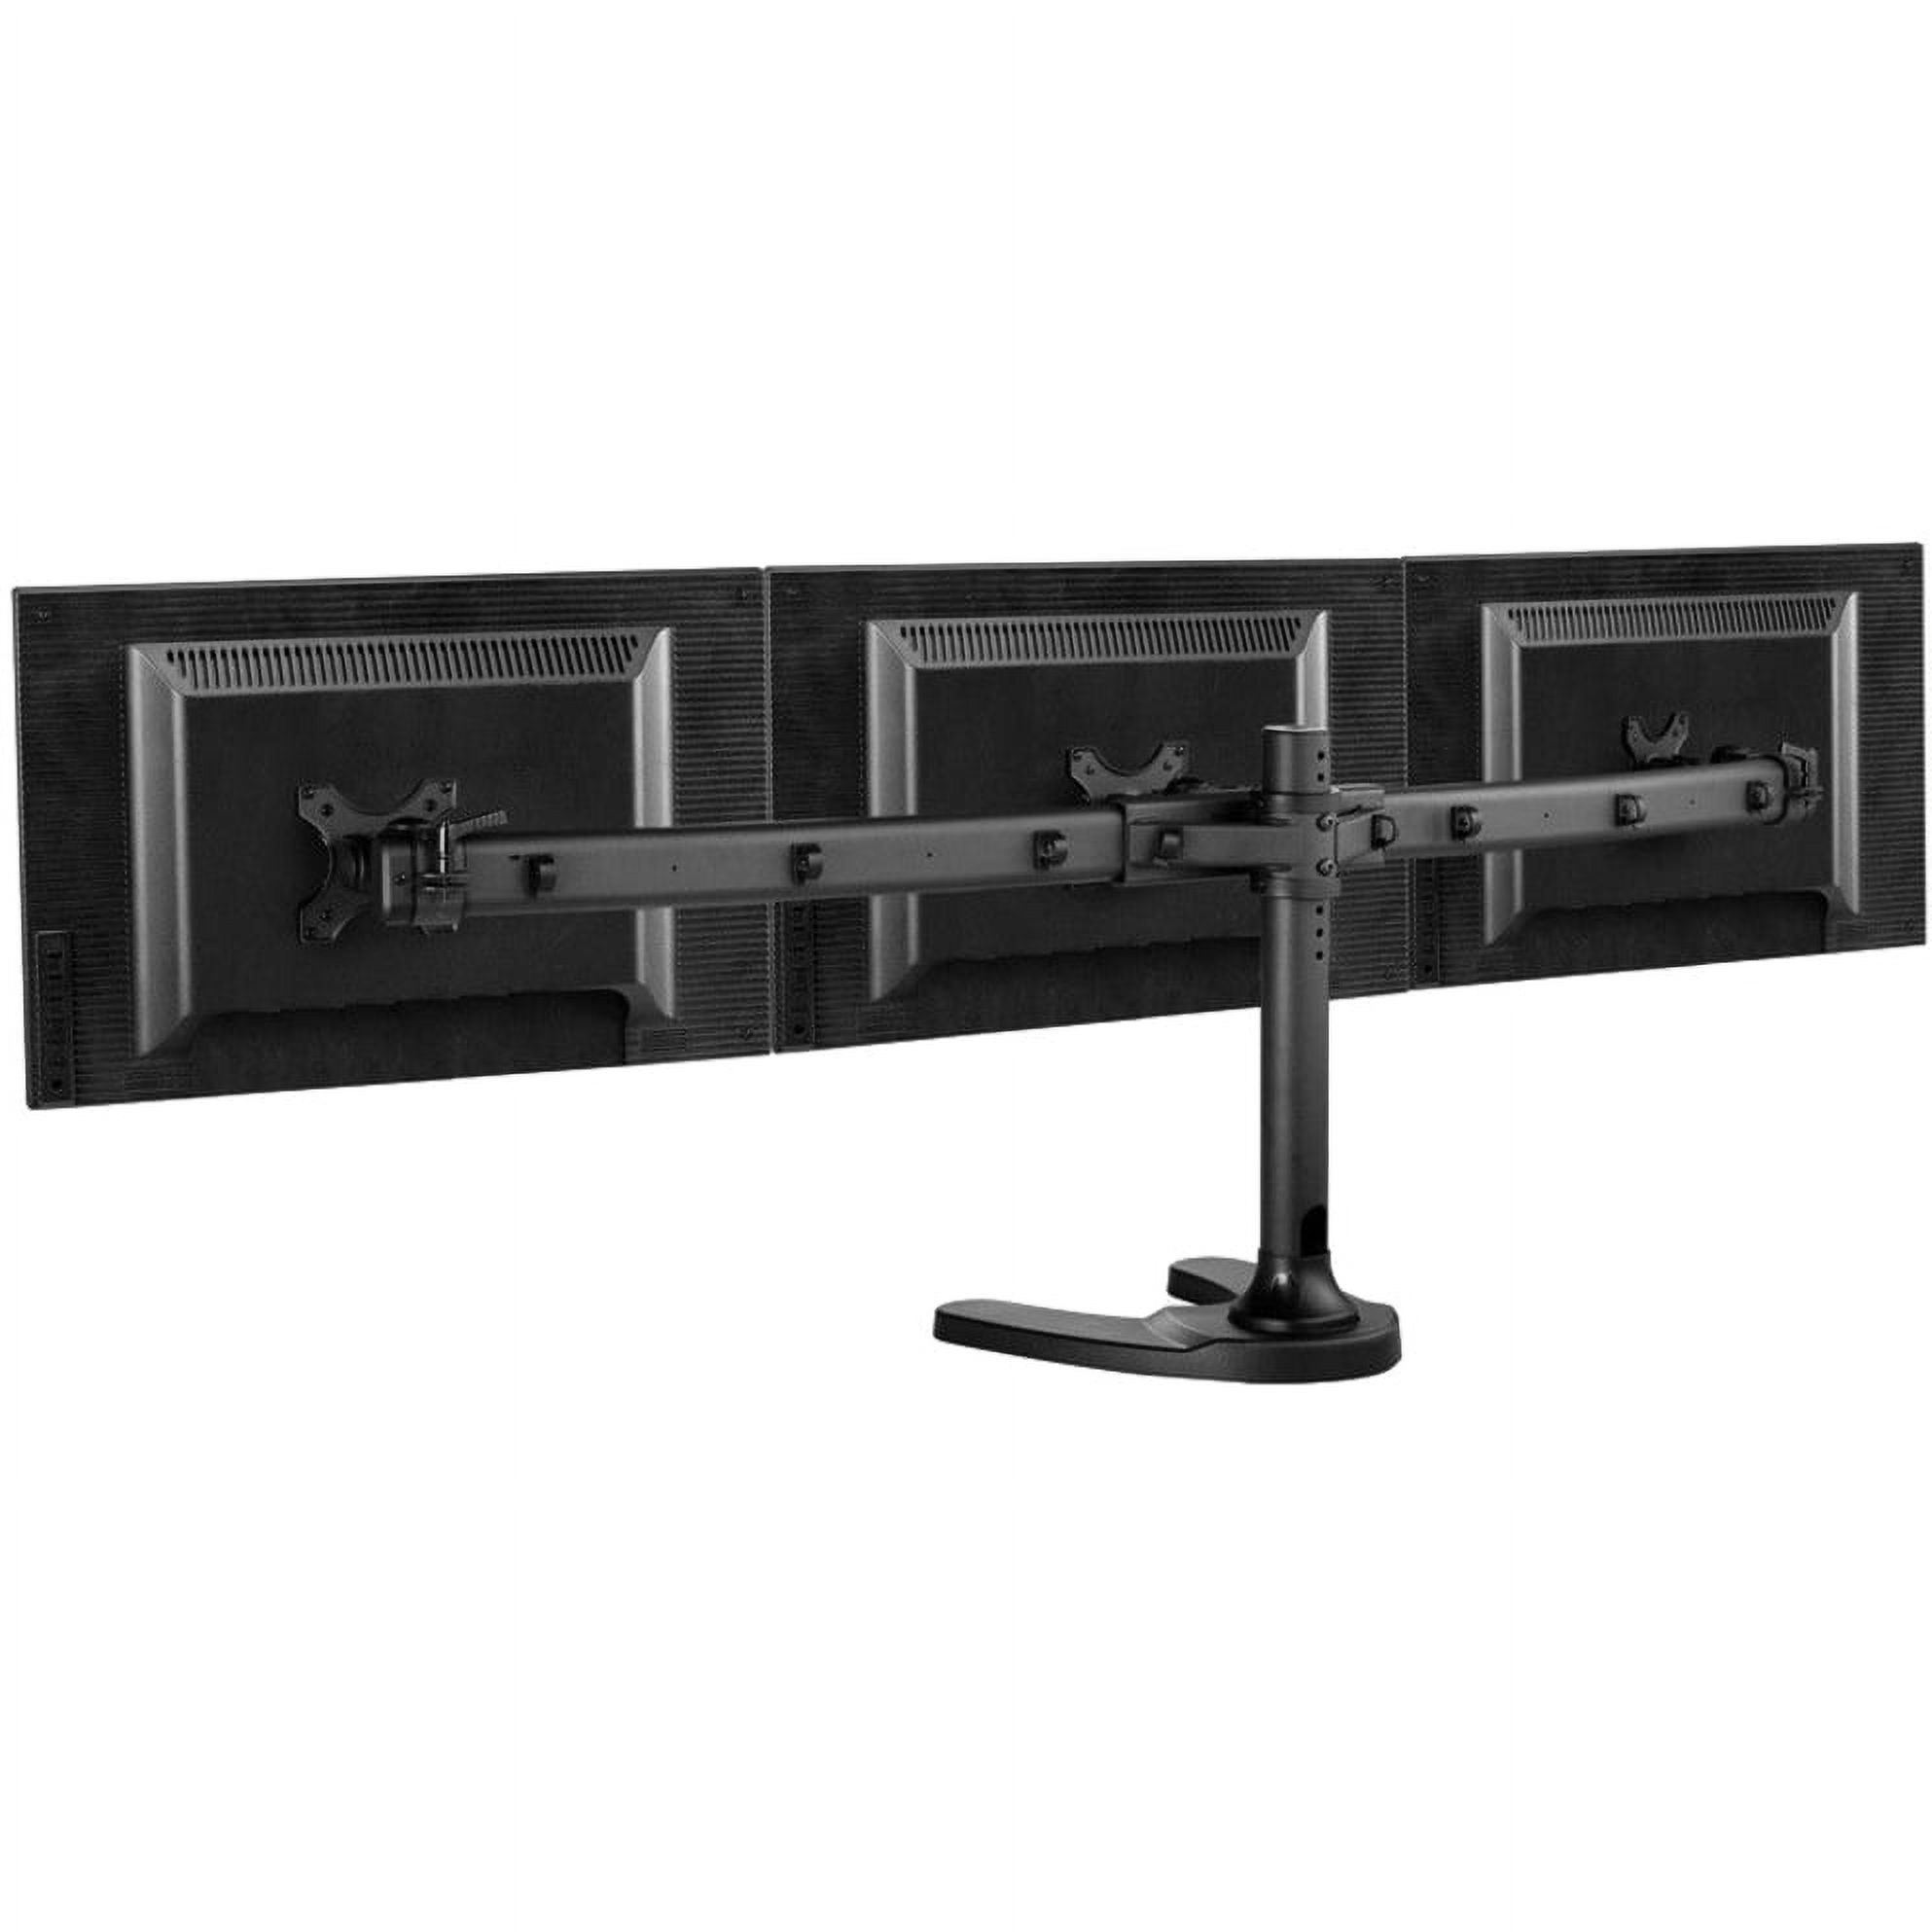 Atdec triple monitor desk mount with a freestanding base, Loads up to 17.6lb, VESA 75x75, 100x100 - image 1 of 10